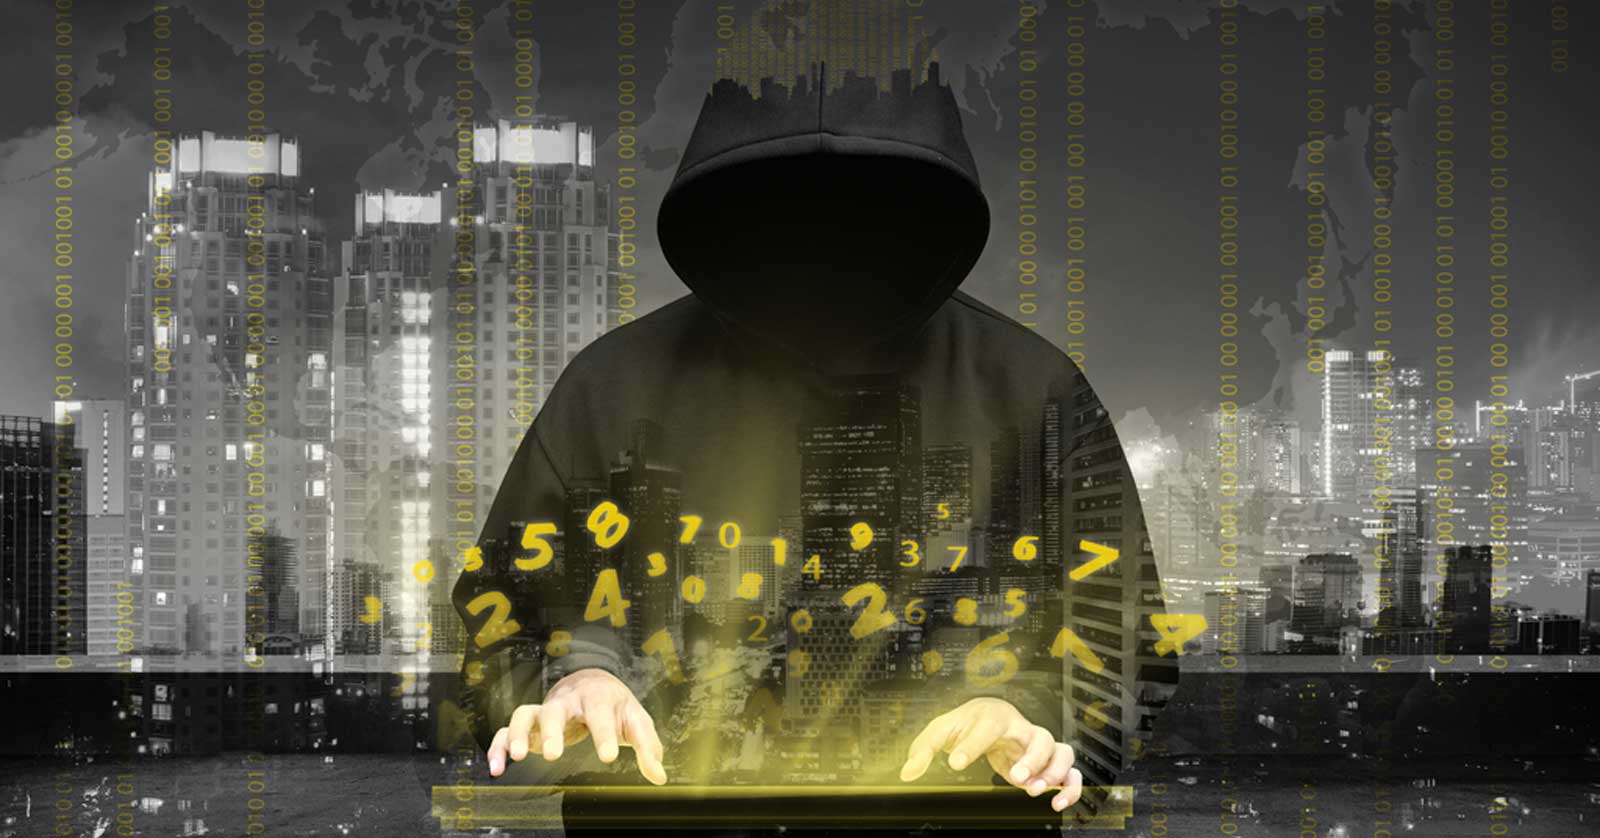 Bleepingcomputer - Data Breach Broker Selling User Records Stolen From 26 Companies